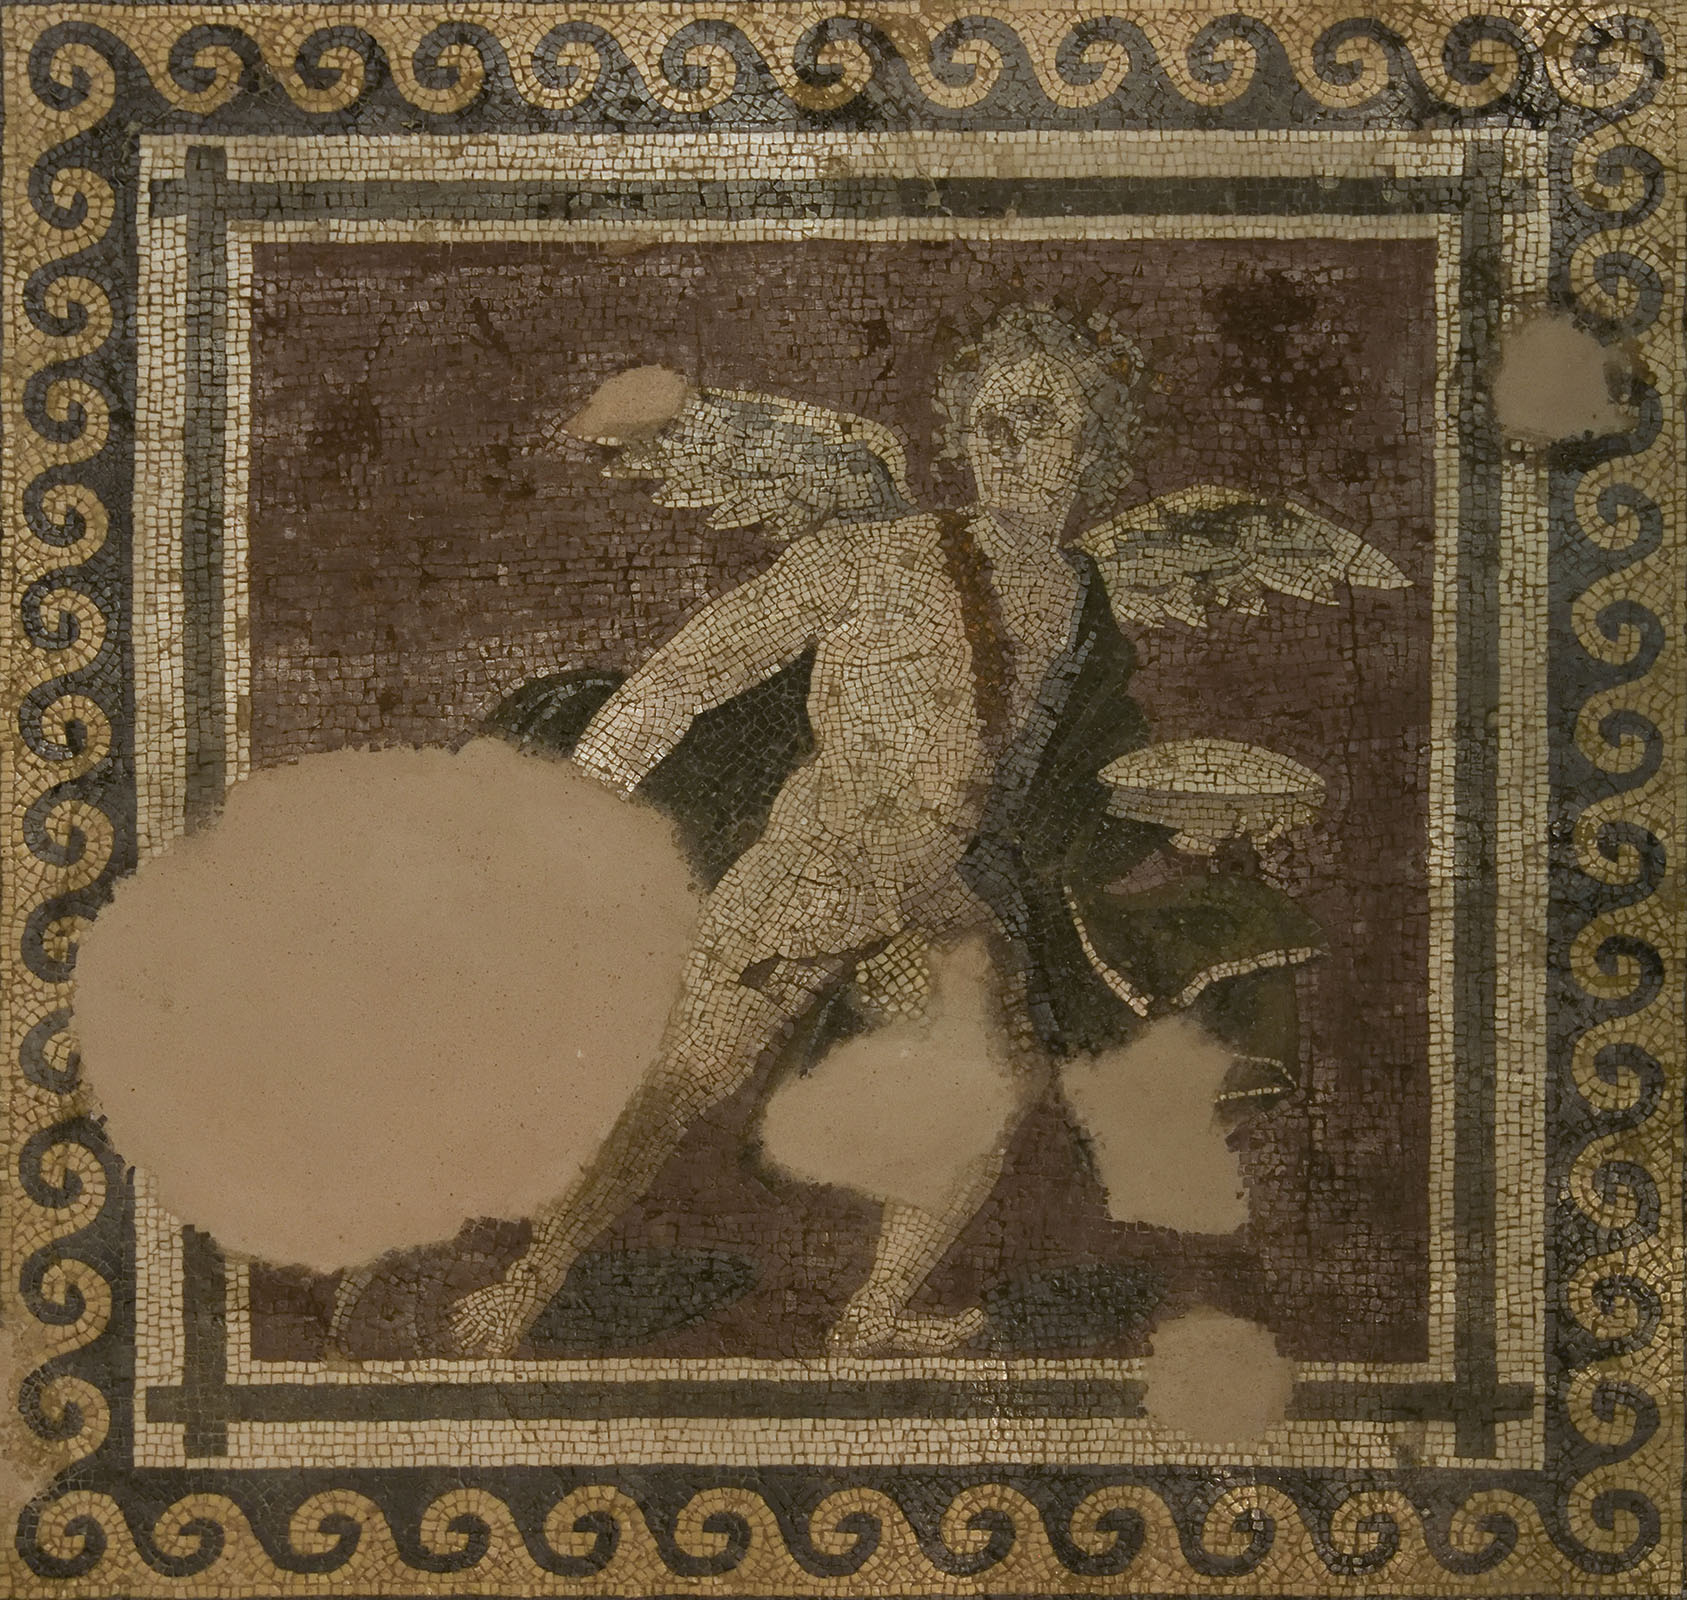 Antakya Archaeology Museum Four seasons Spring mosaic sept 2019 6047e.jpg